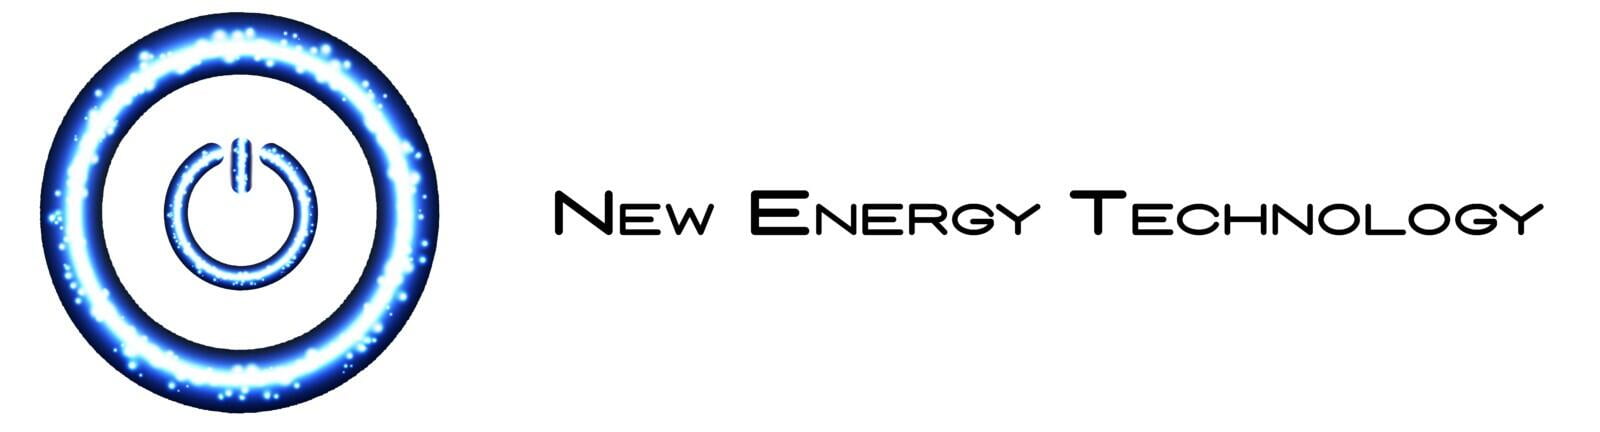 New-Energy-Technology-logo